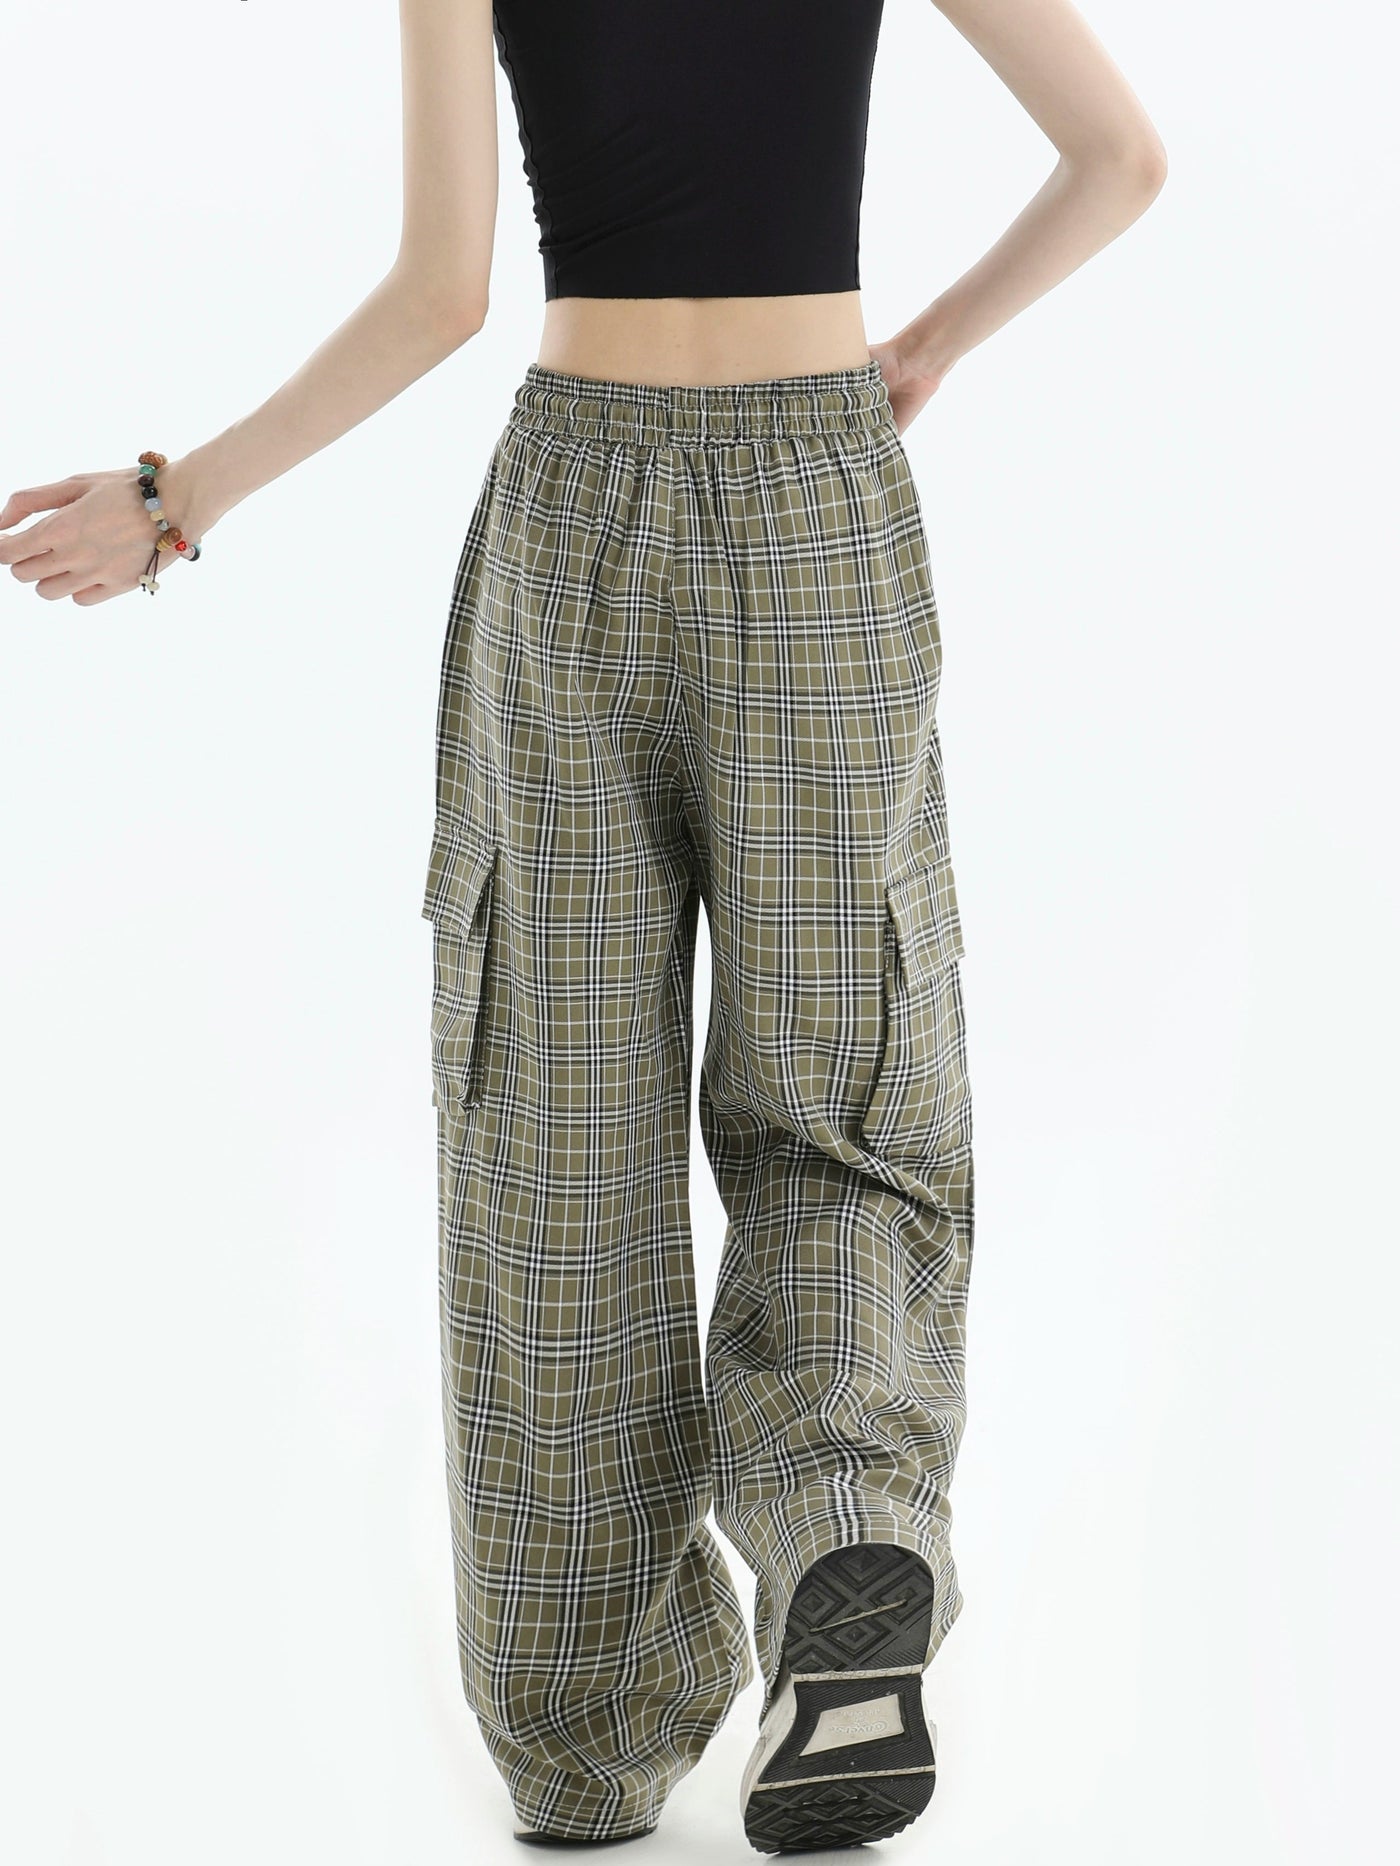 Gartered Plaid Cargo Pants Korean Street Fashion Pants By INS Korea Shop Online at OH Vault